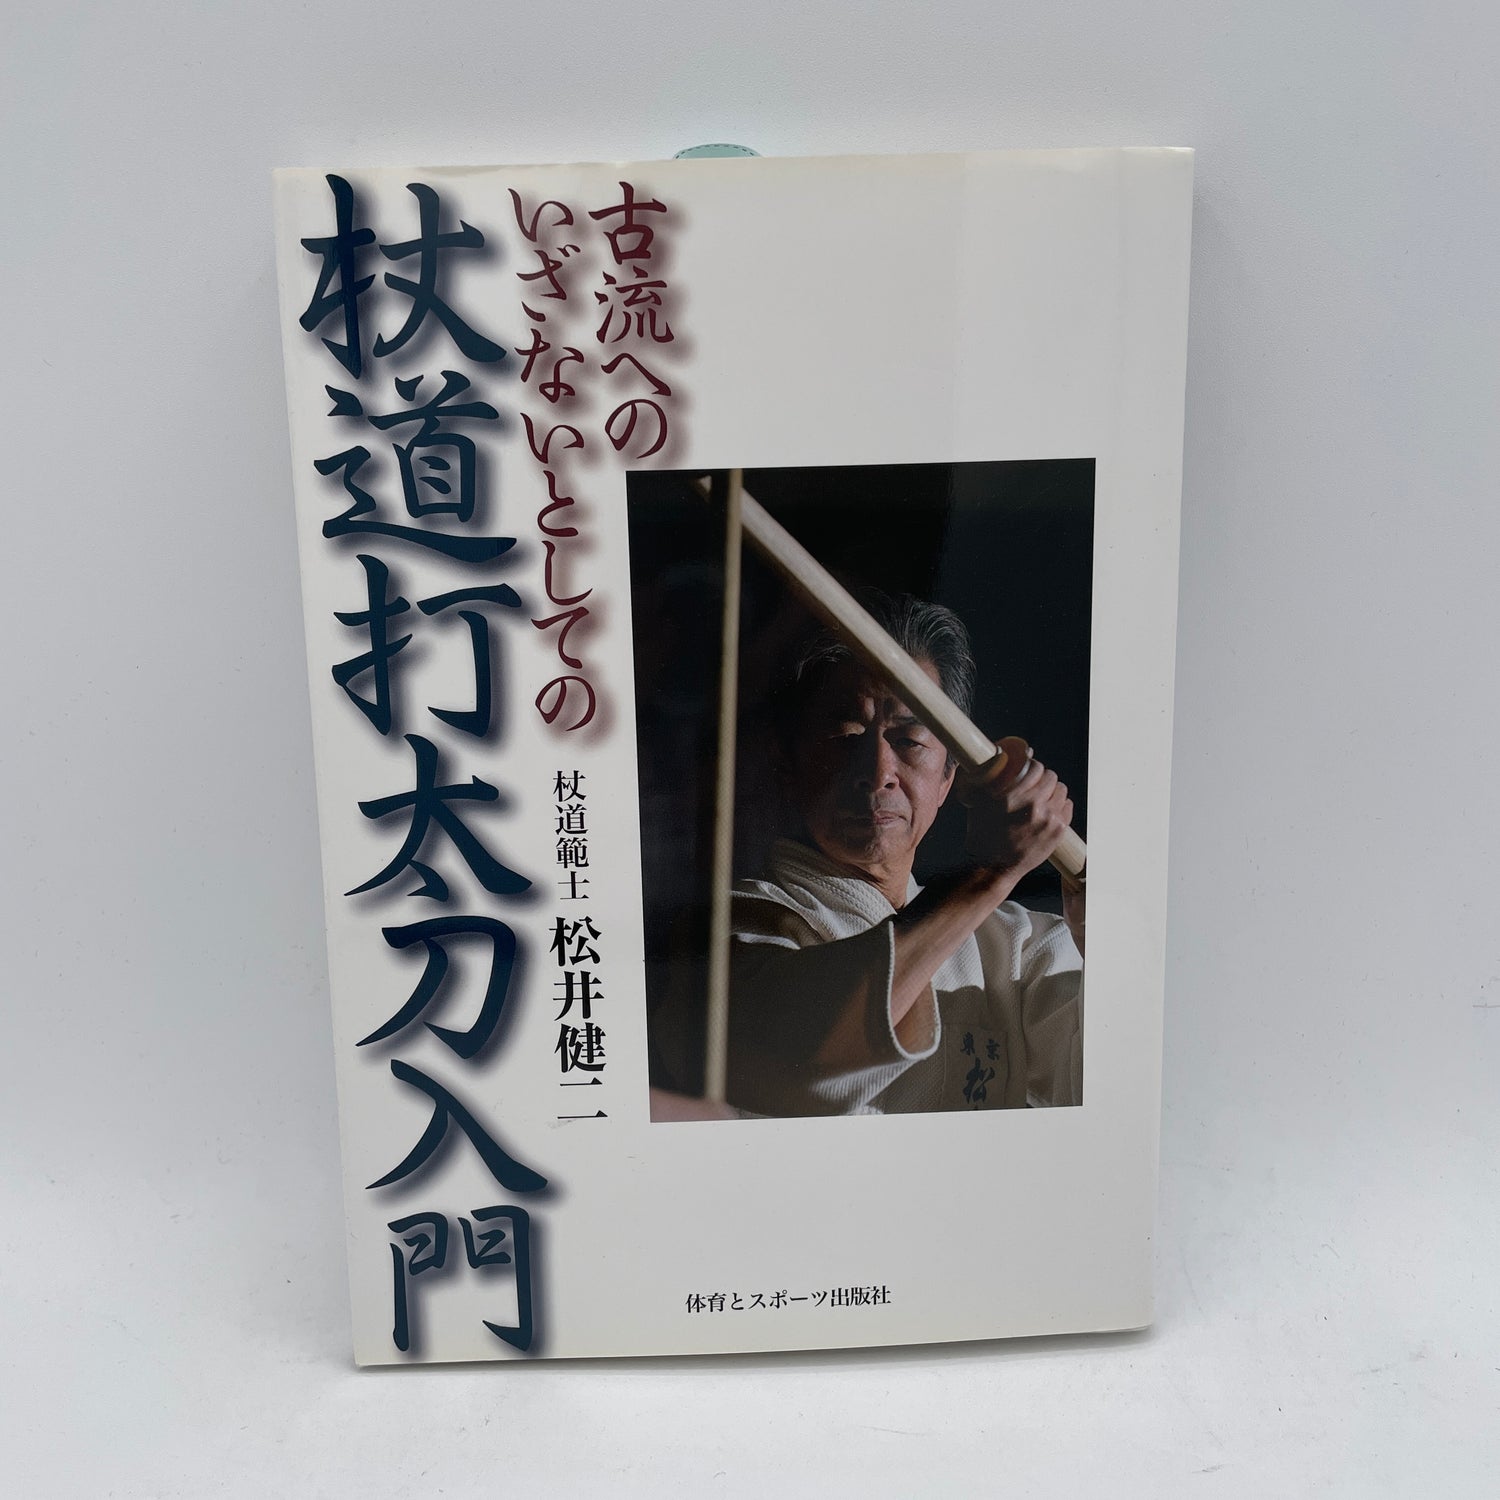 Introducción al libro Jodo Uchitachi de Kenji Matsui